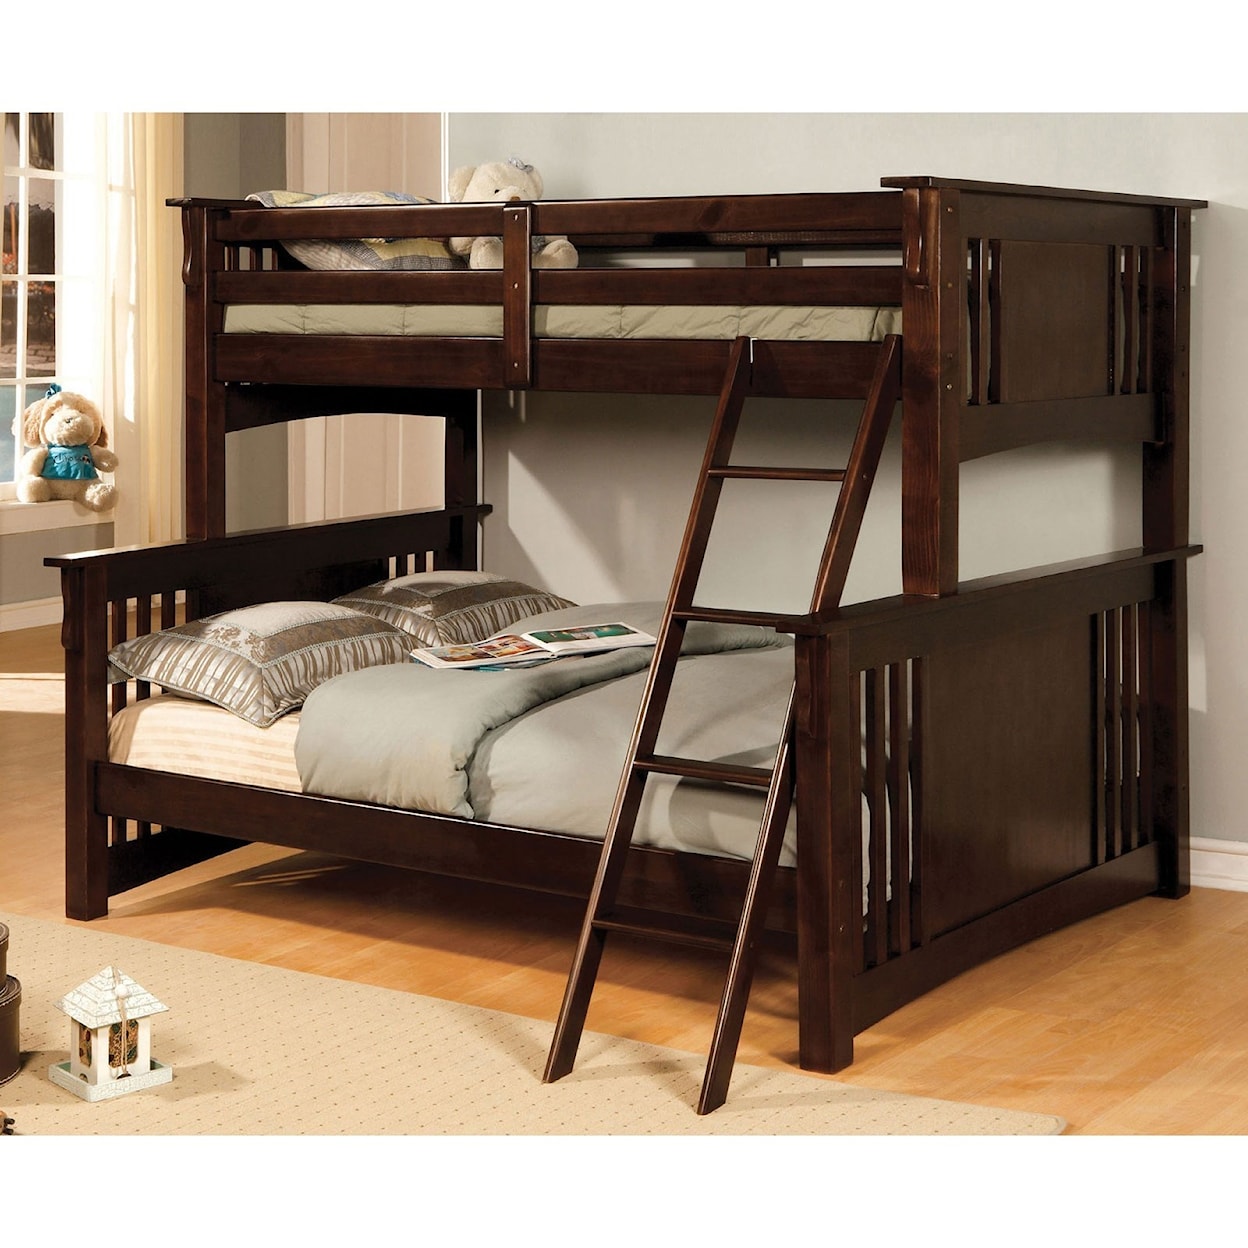 Furniture of America Spring Creek Twin/Full Bunk Bed